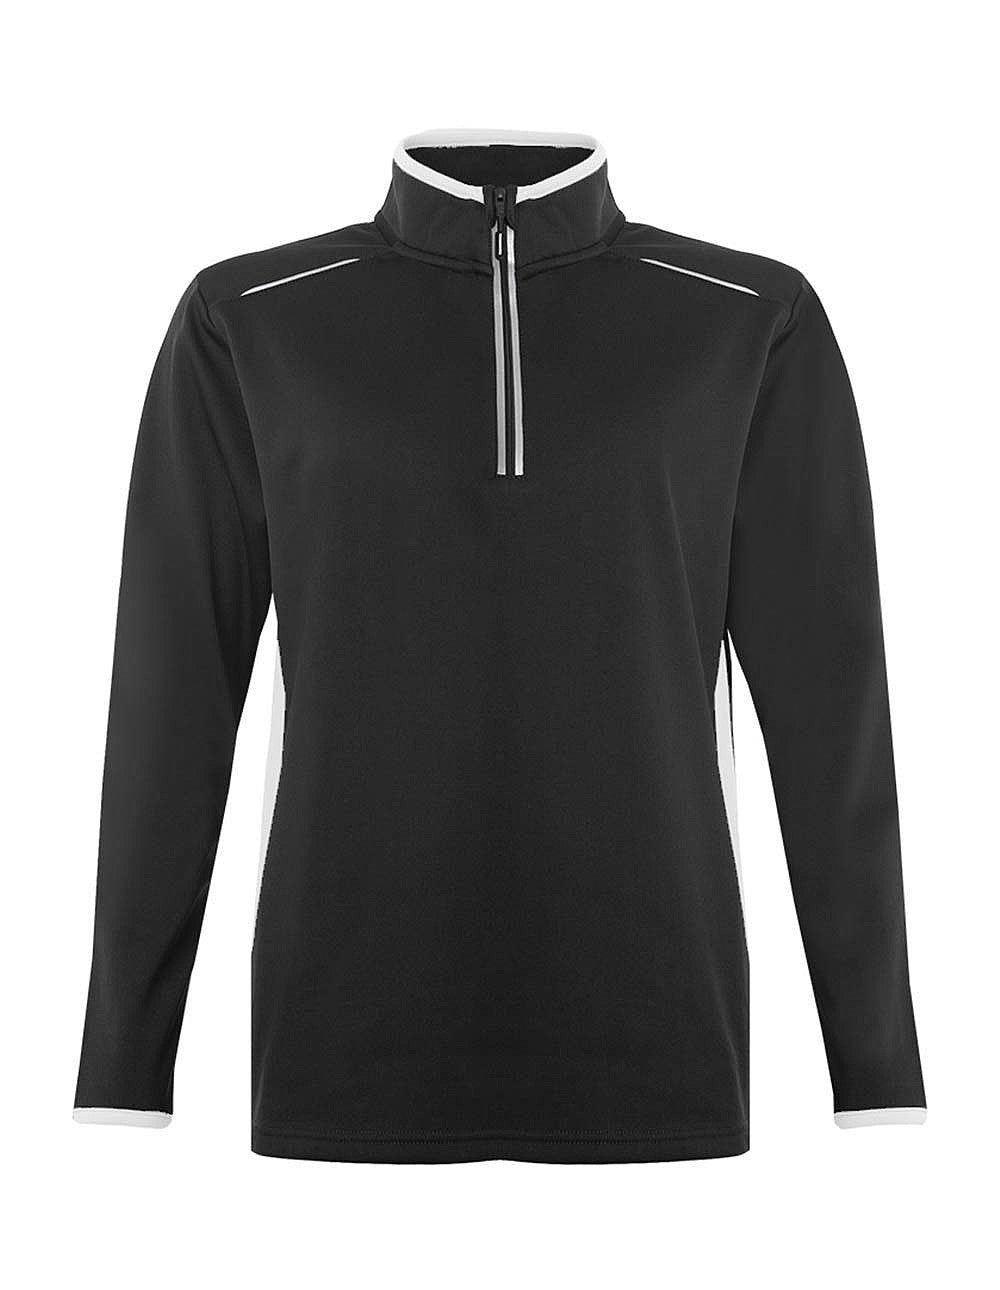 Black And White Sport Quarter Zip Jacket